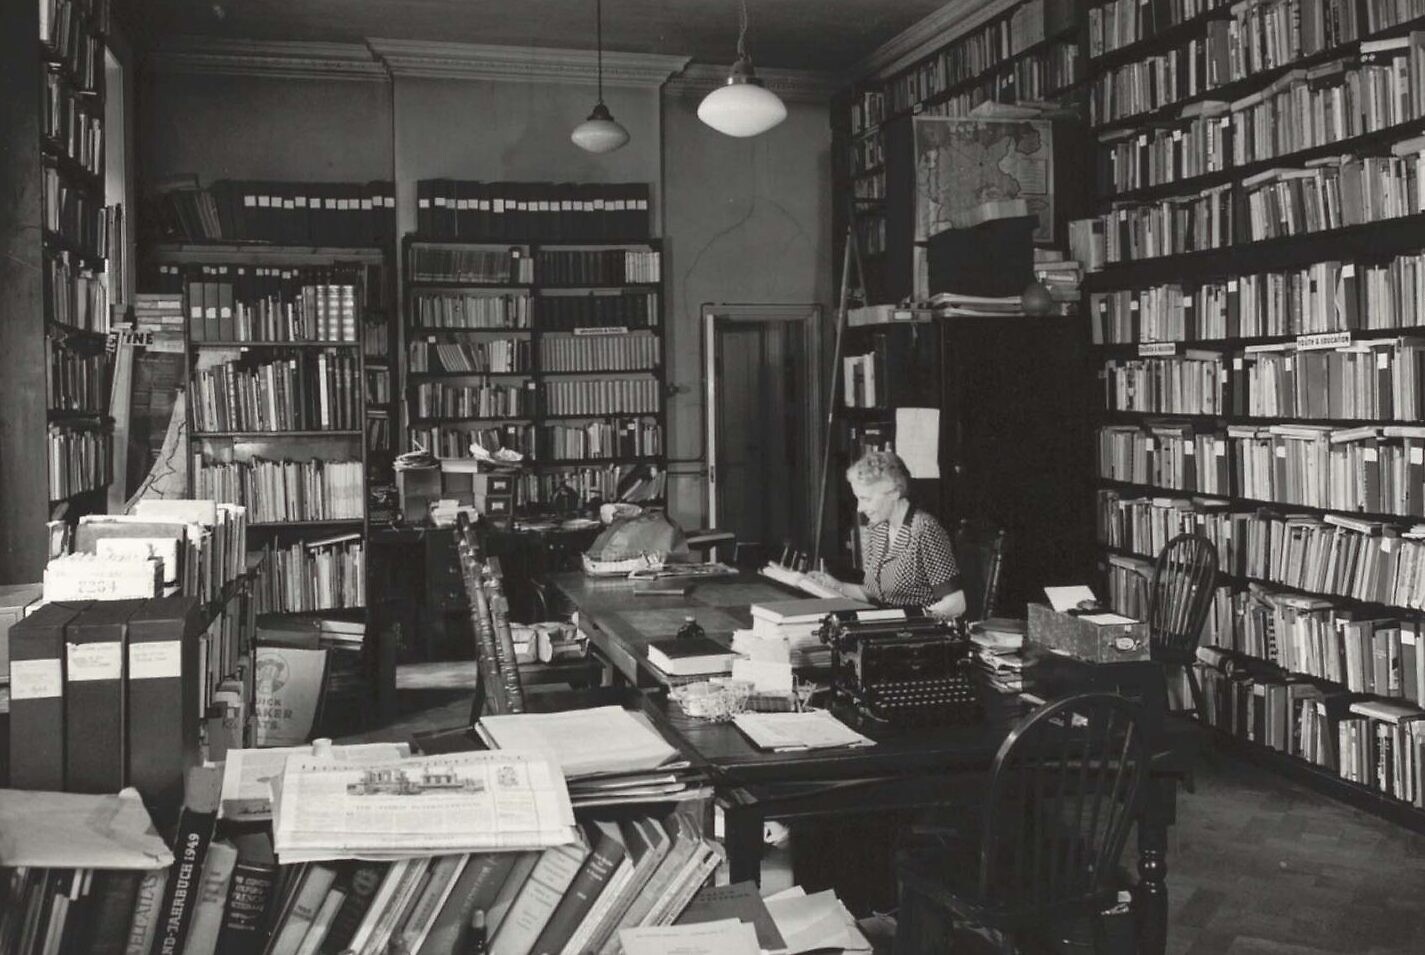 Staff member Mrs. Walter at the Wiener Holocaust Library in 1952. (Wiener Holocaust Library)